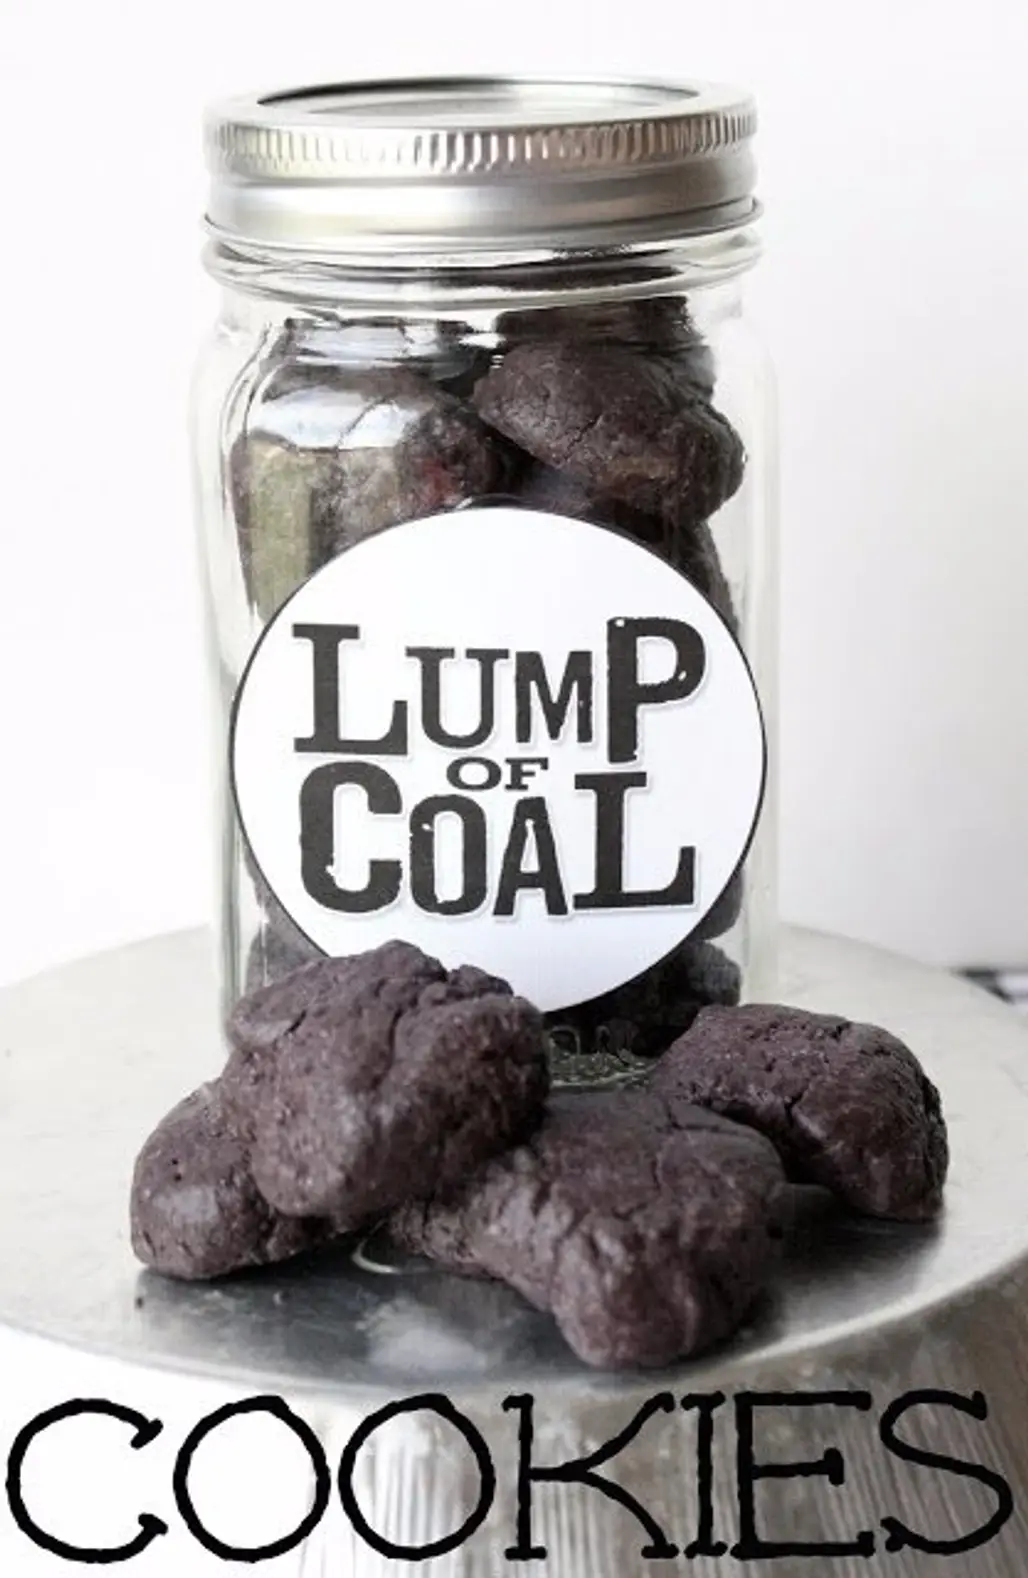 Lump of Coal Cookies